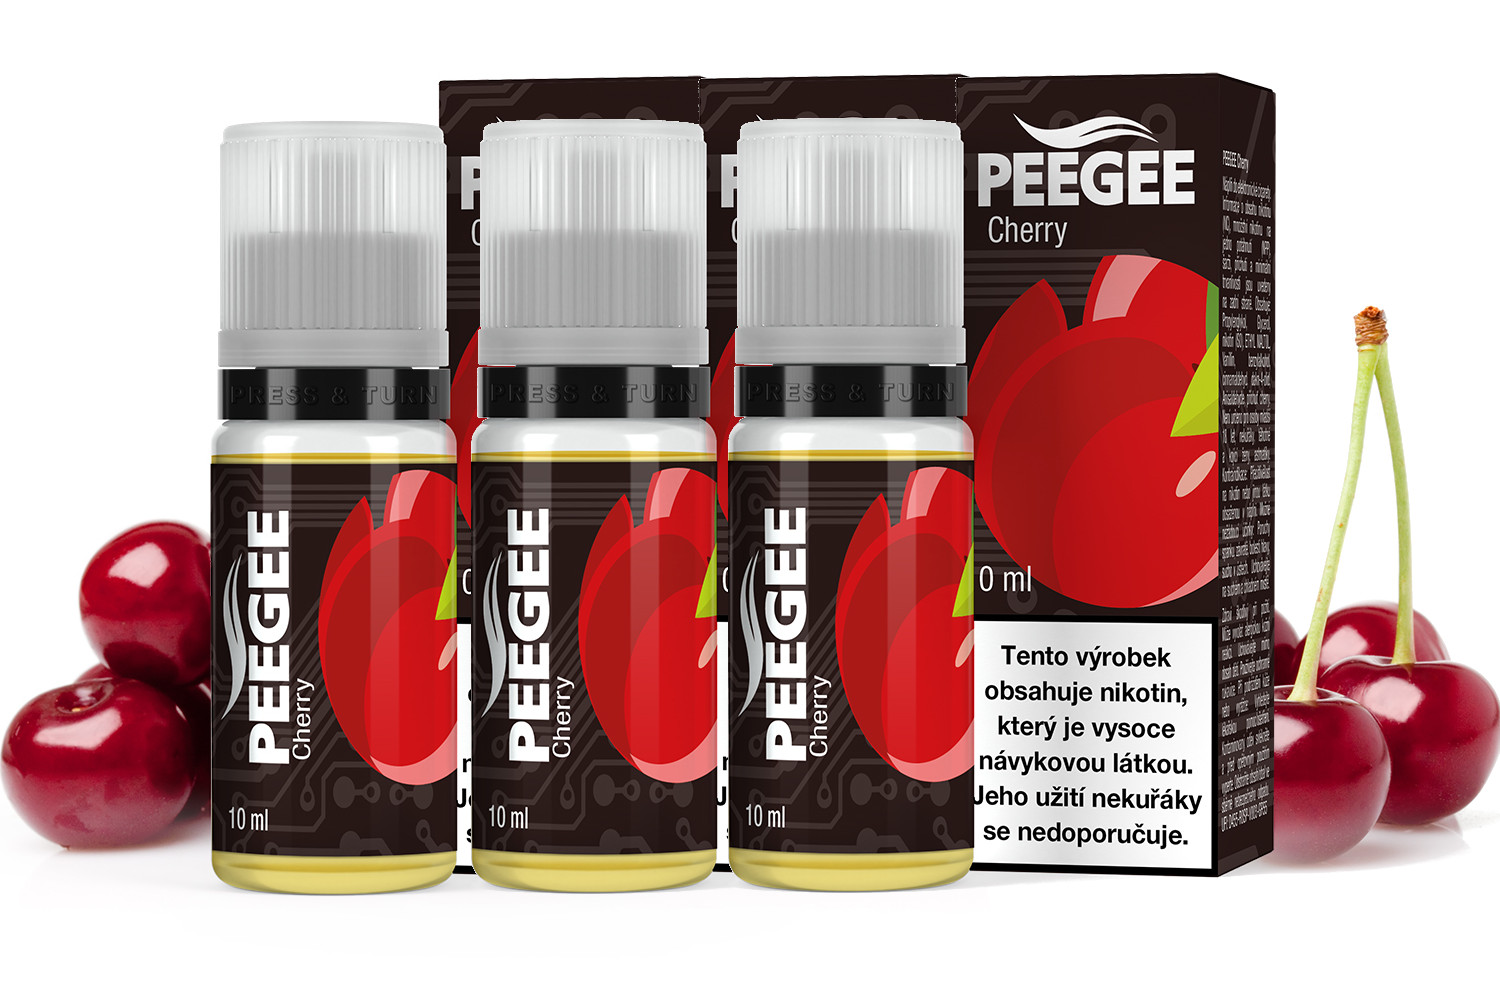 PEEGEE - Višeň (Cherry) 3x10ml Obsah nikotinu: 12mg